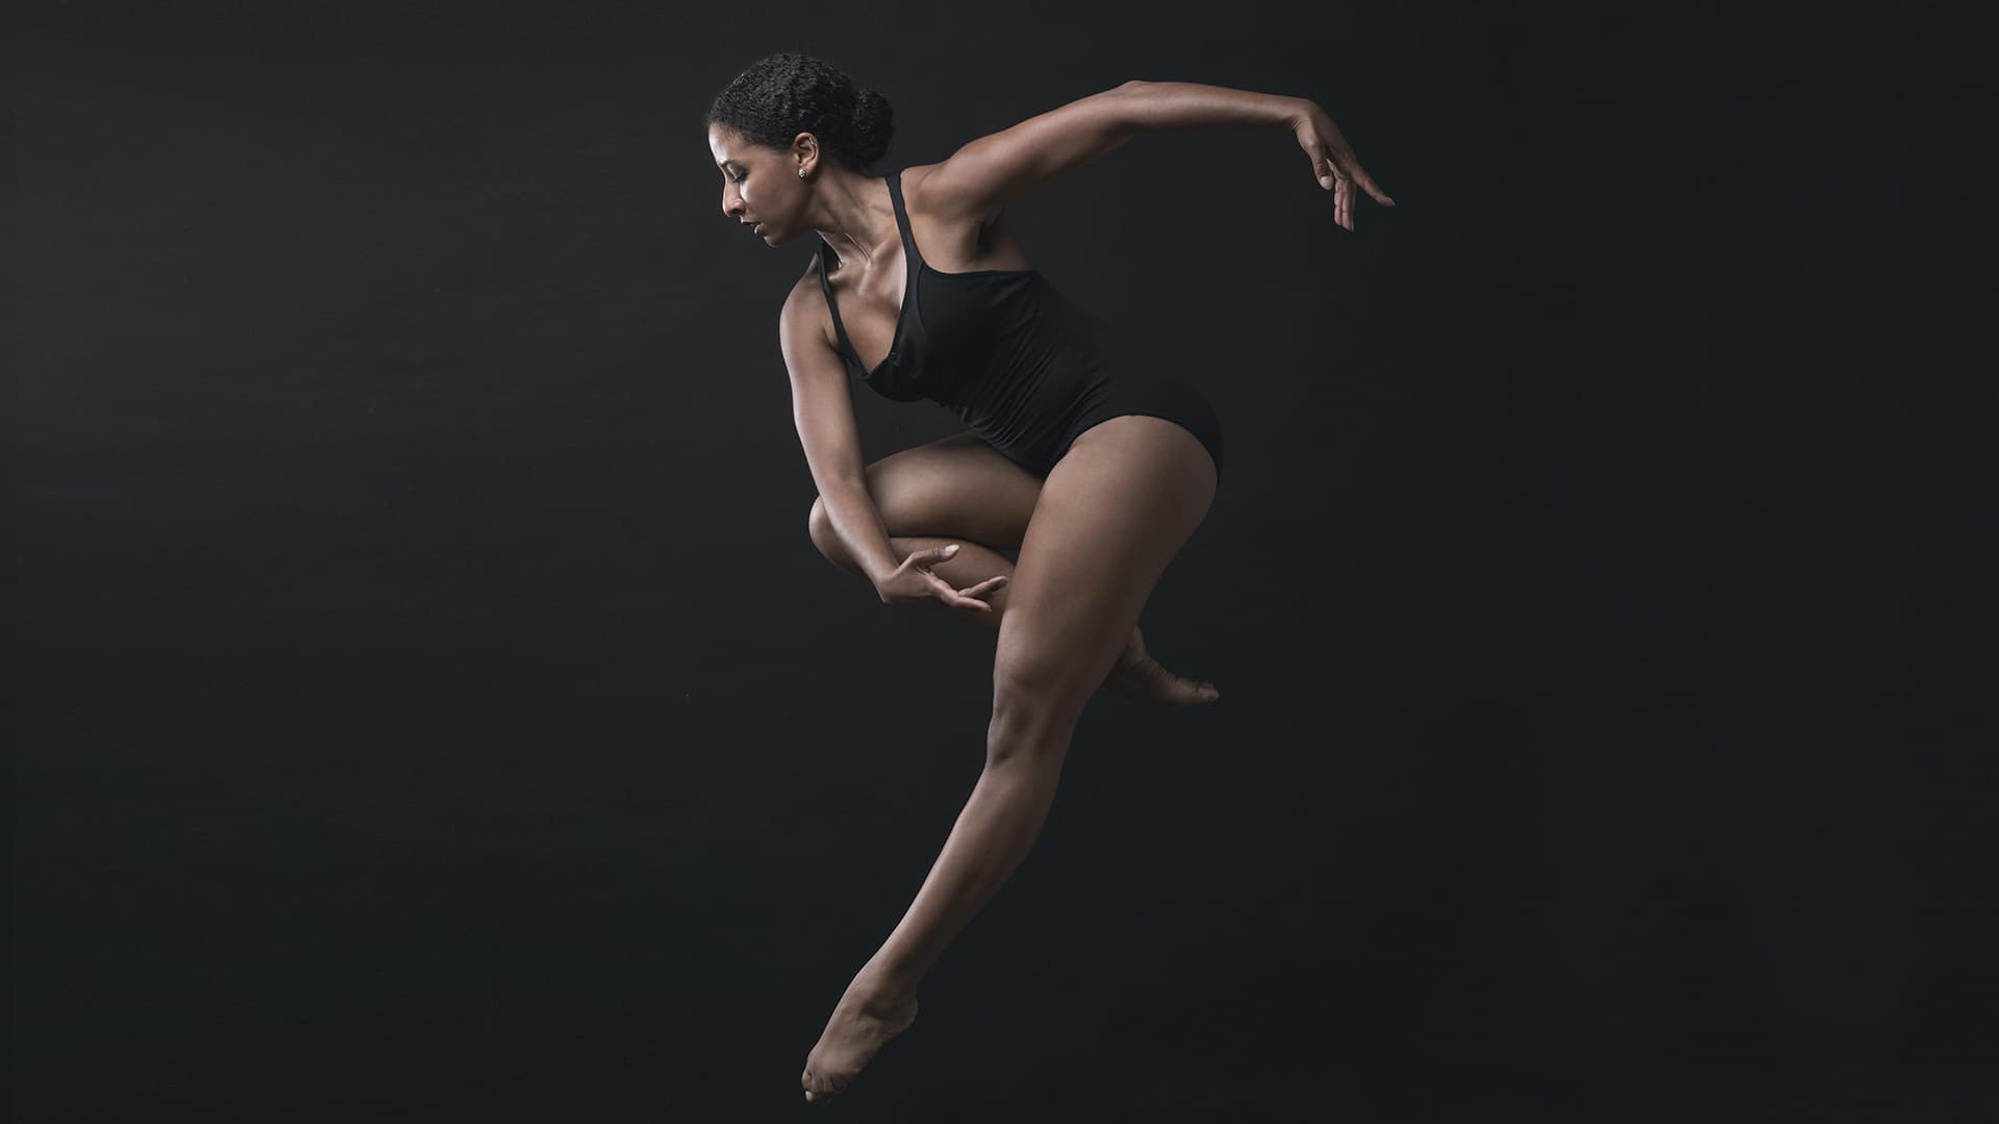 Amélia Lamanque - Black Ballerina jumps in black tights